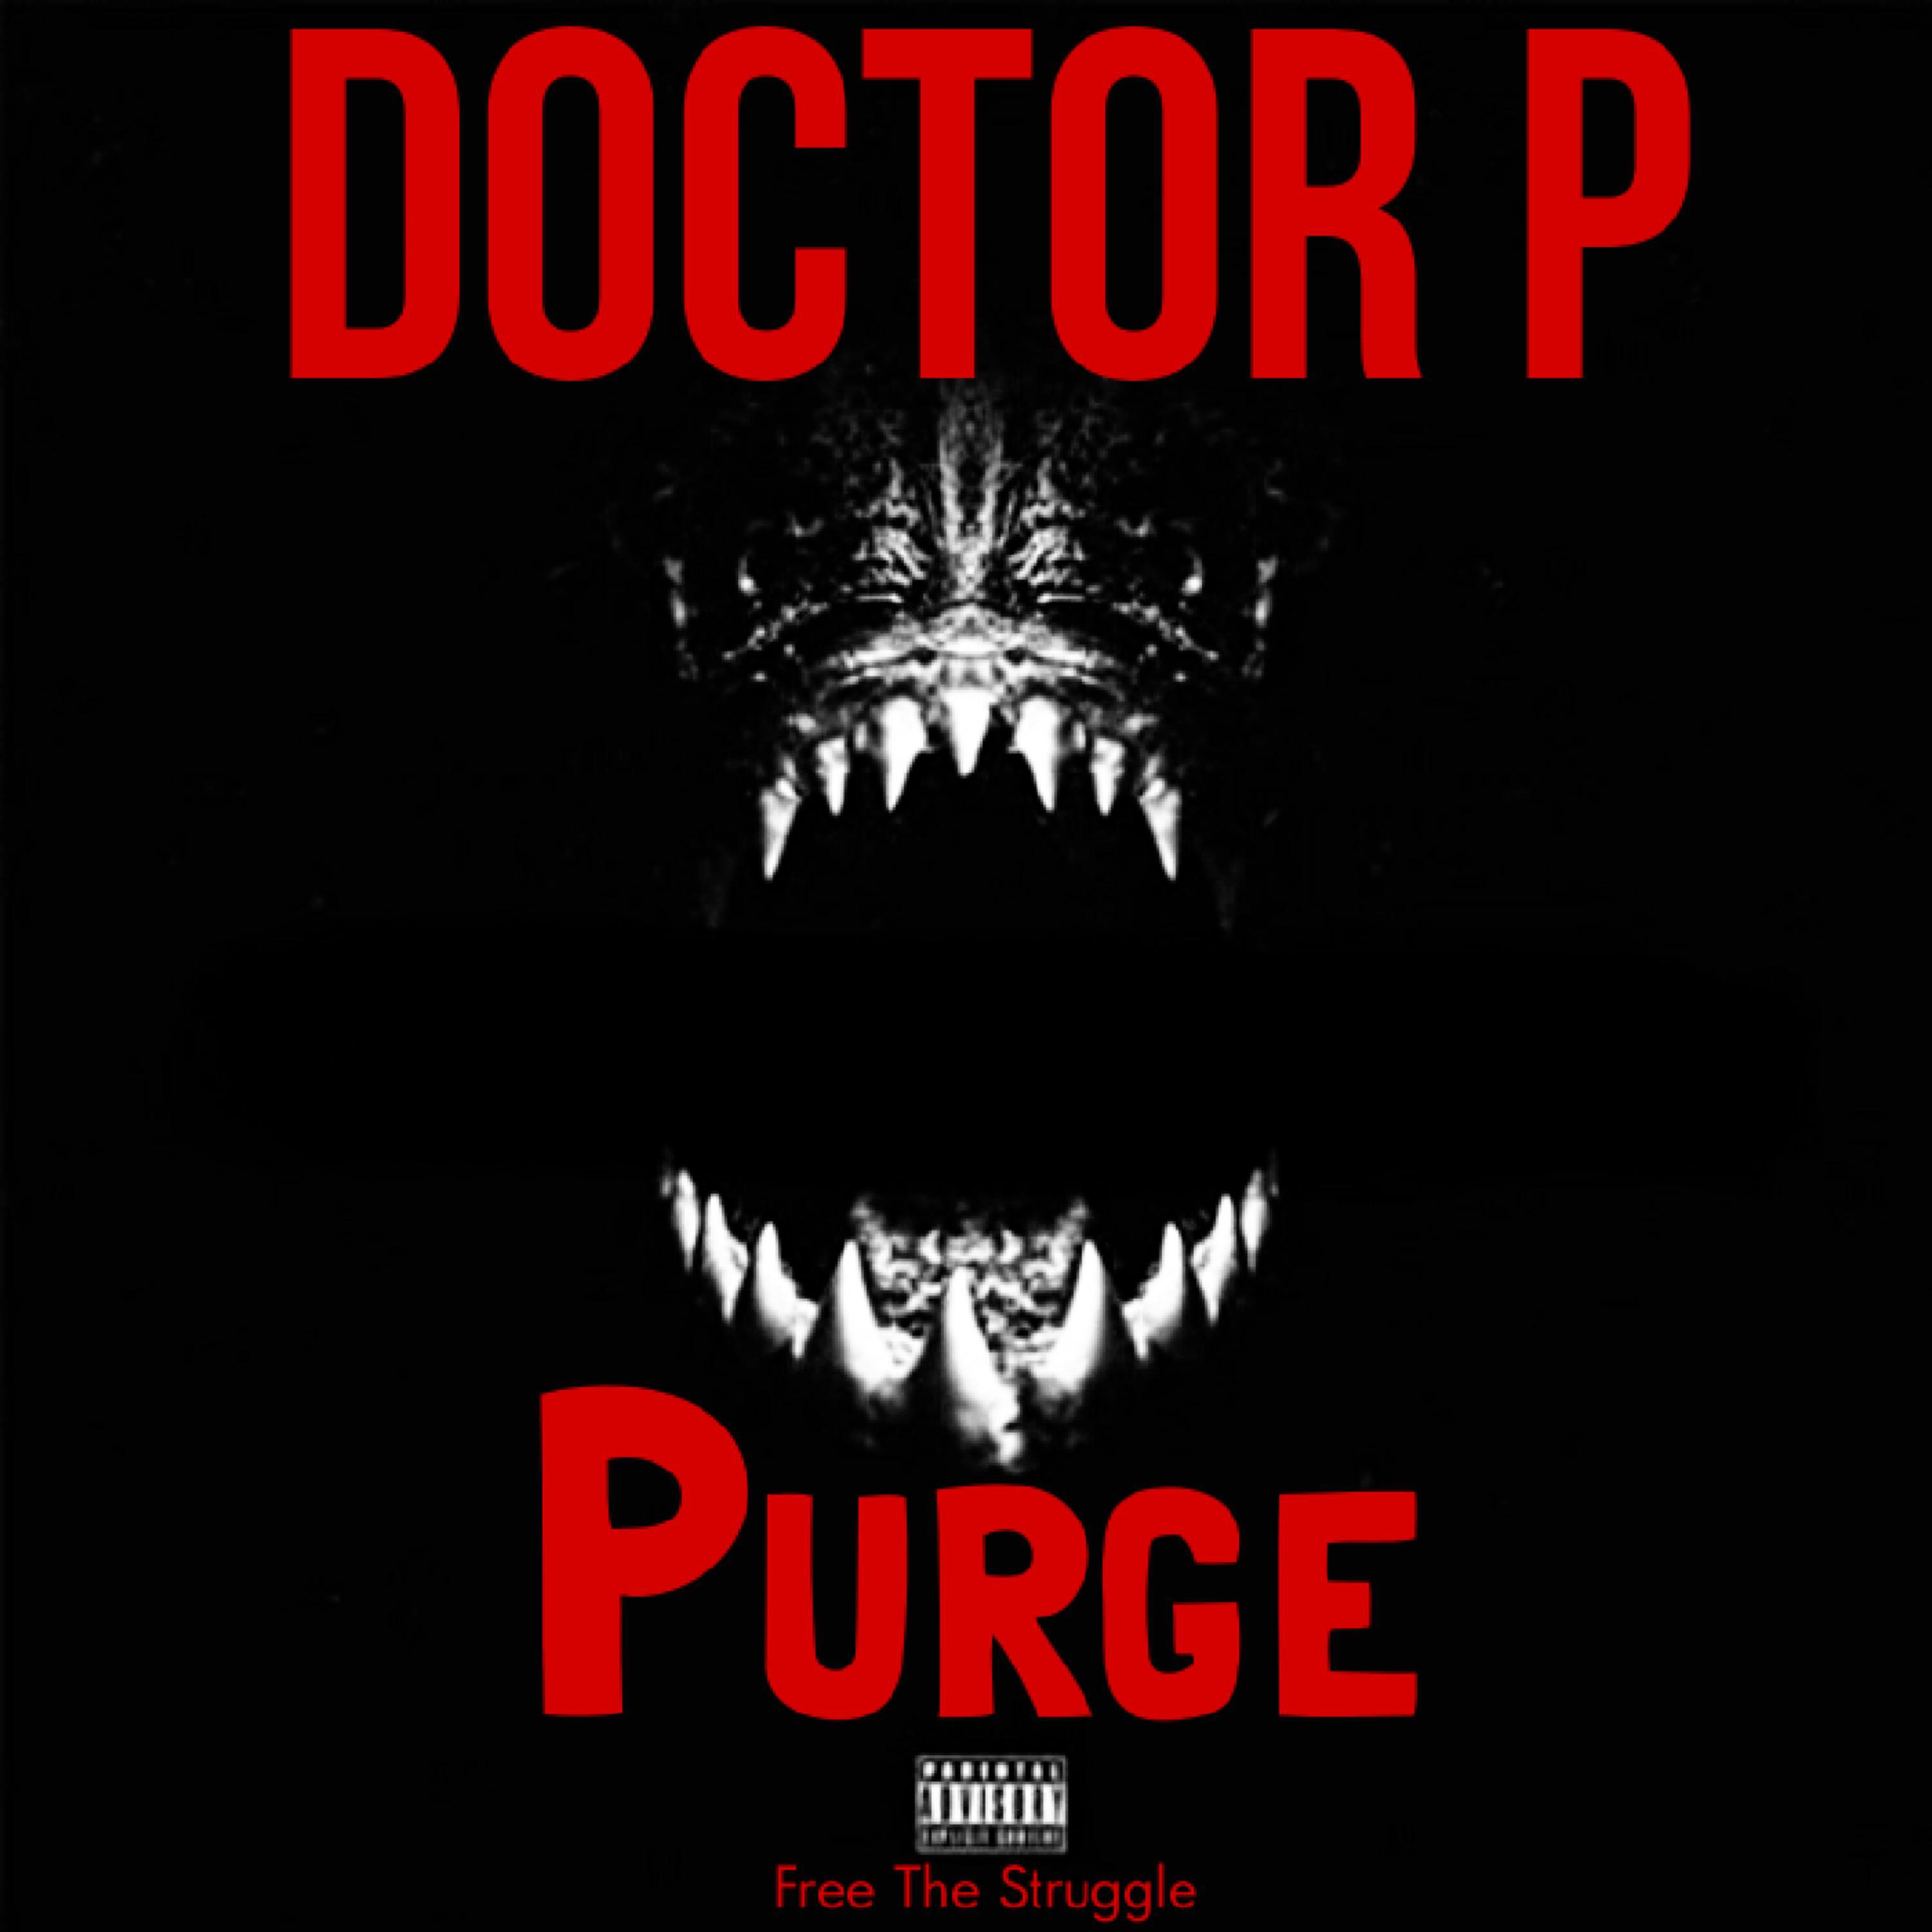 Doctor P - Purge